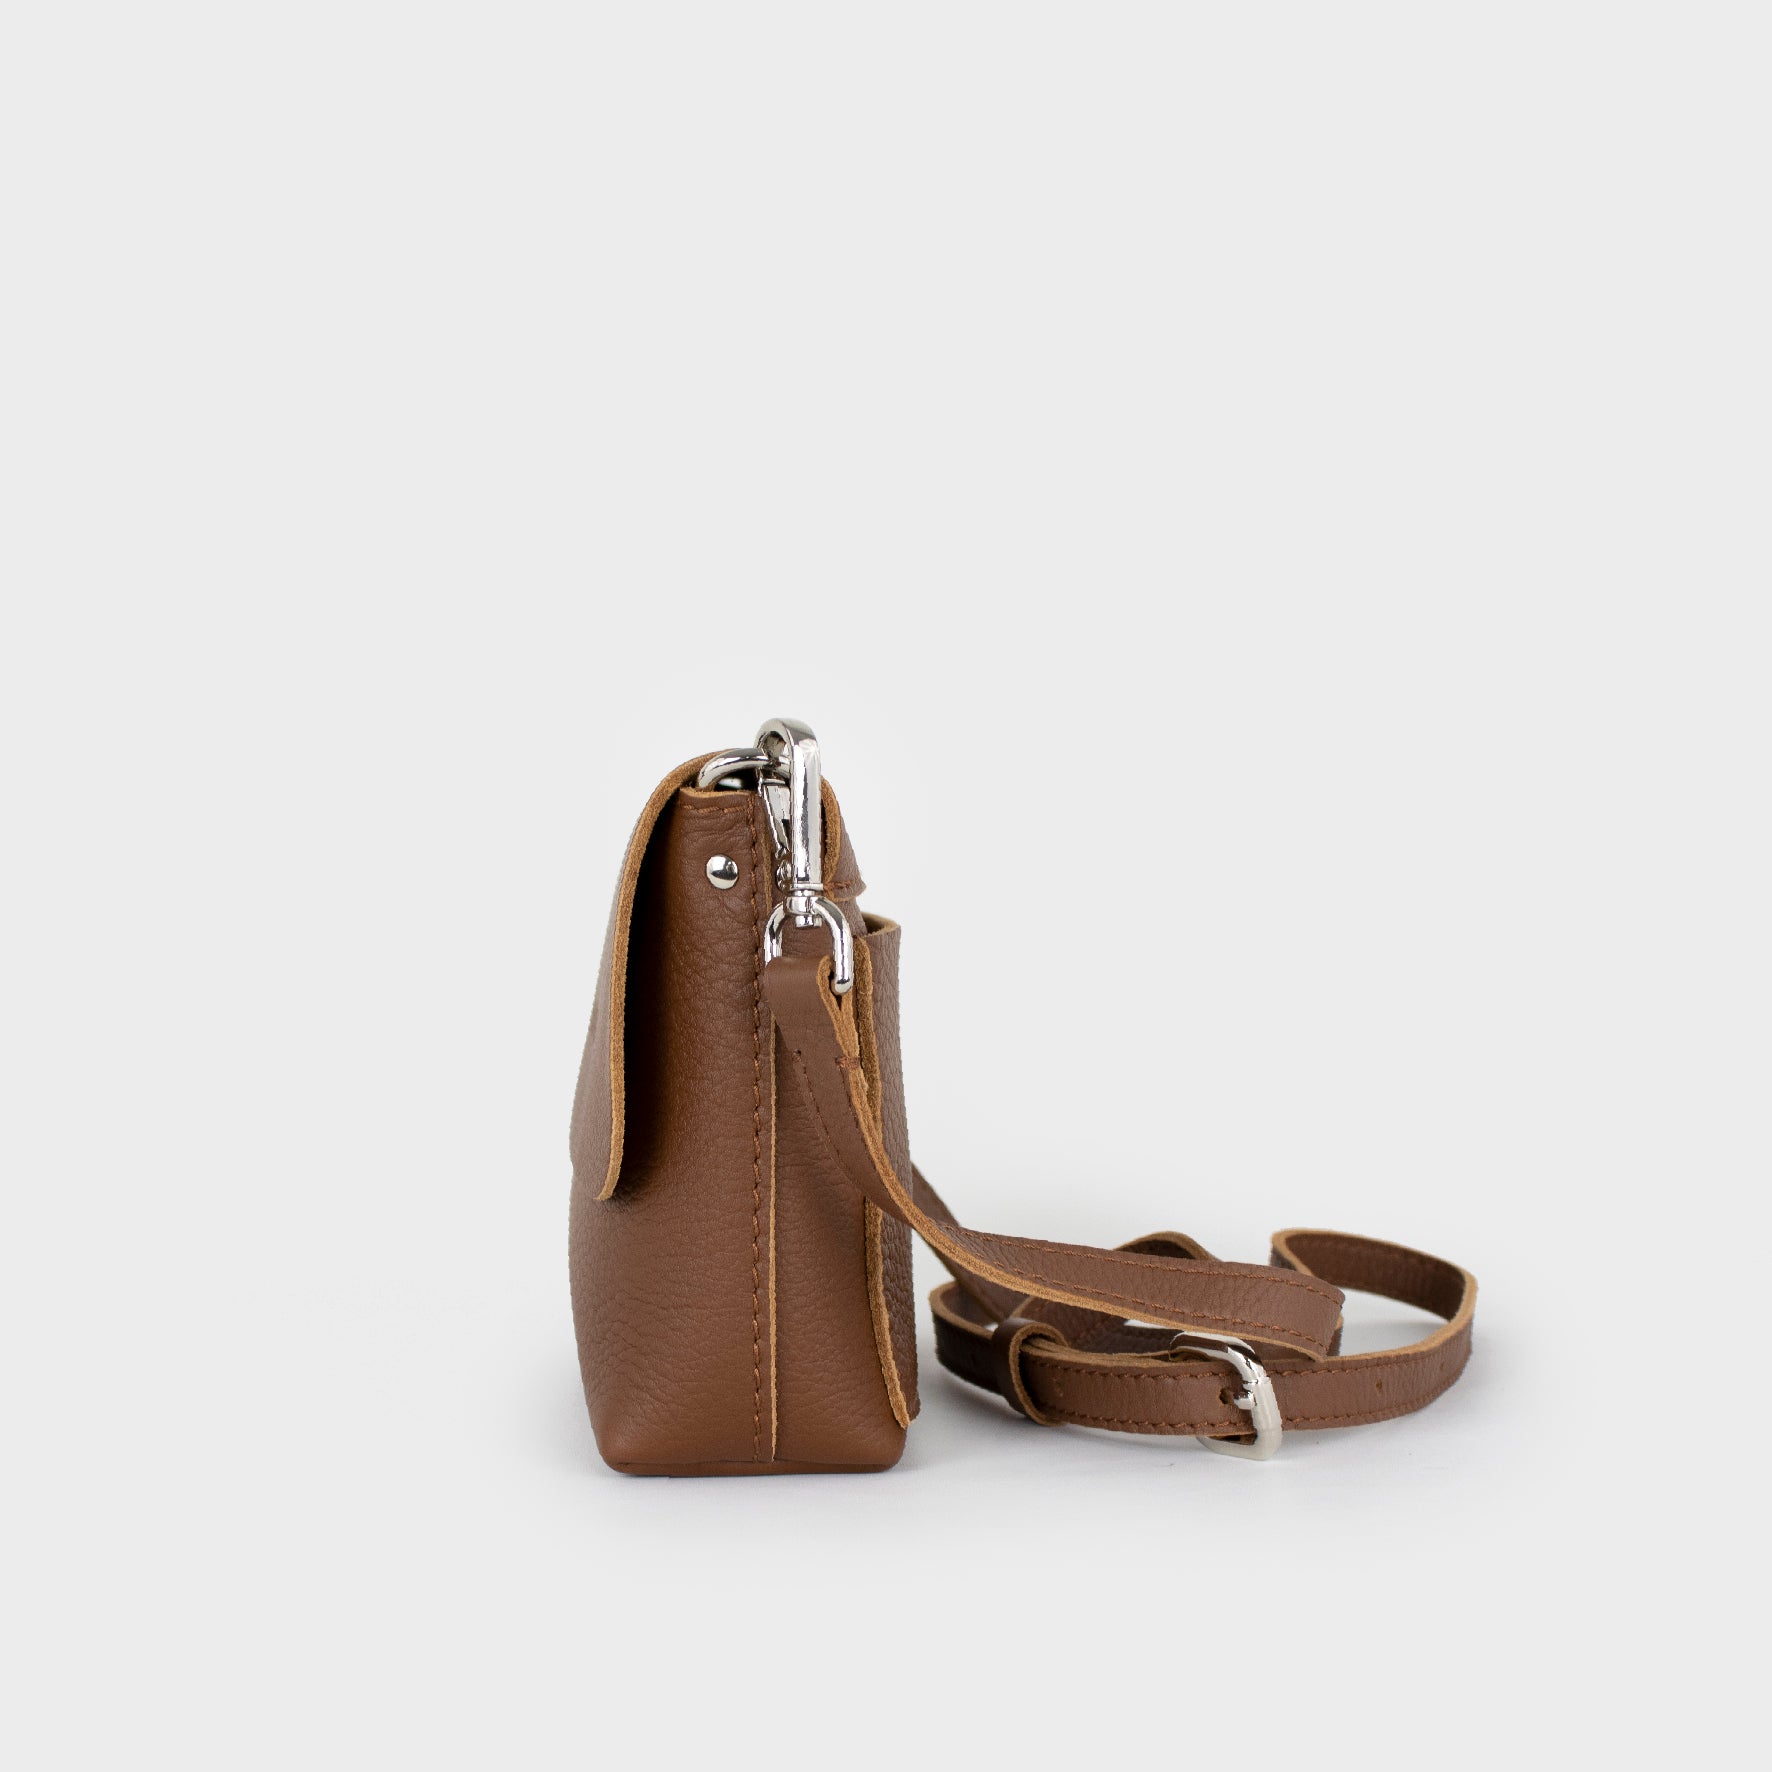 Joy Syna S - Leather Crossbody Bag - Tan